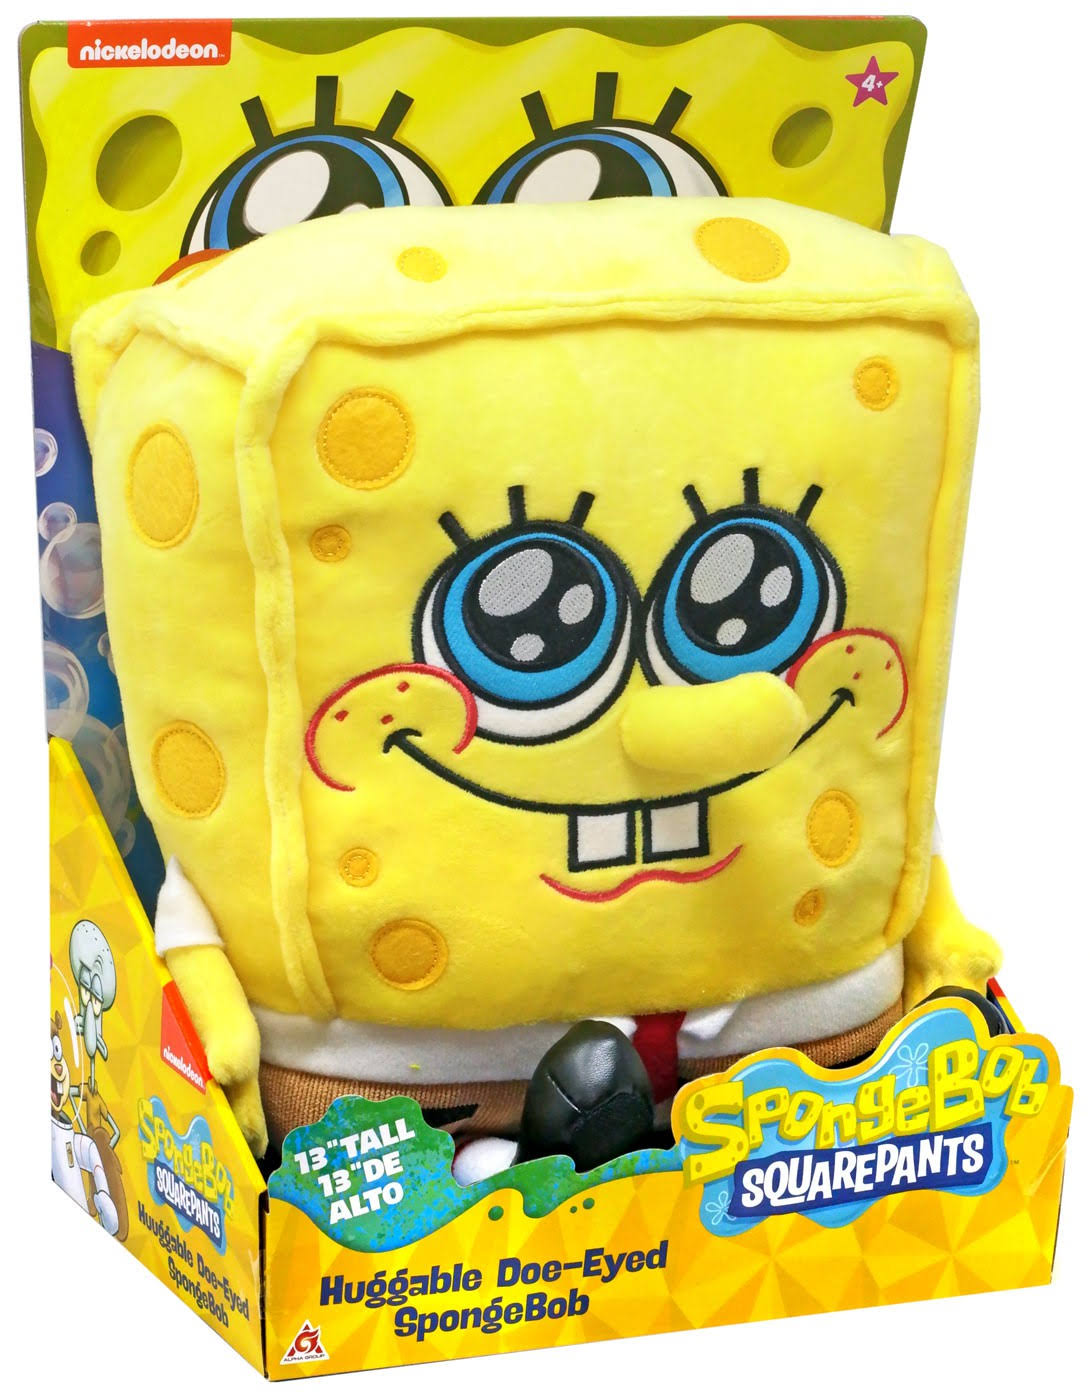 Nickelodeon Spongebob SquarePants Huggable Doe-Eyed Spongebob Plush